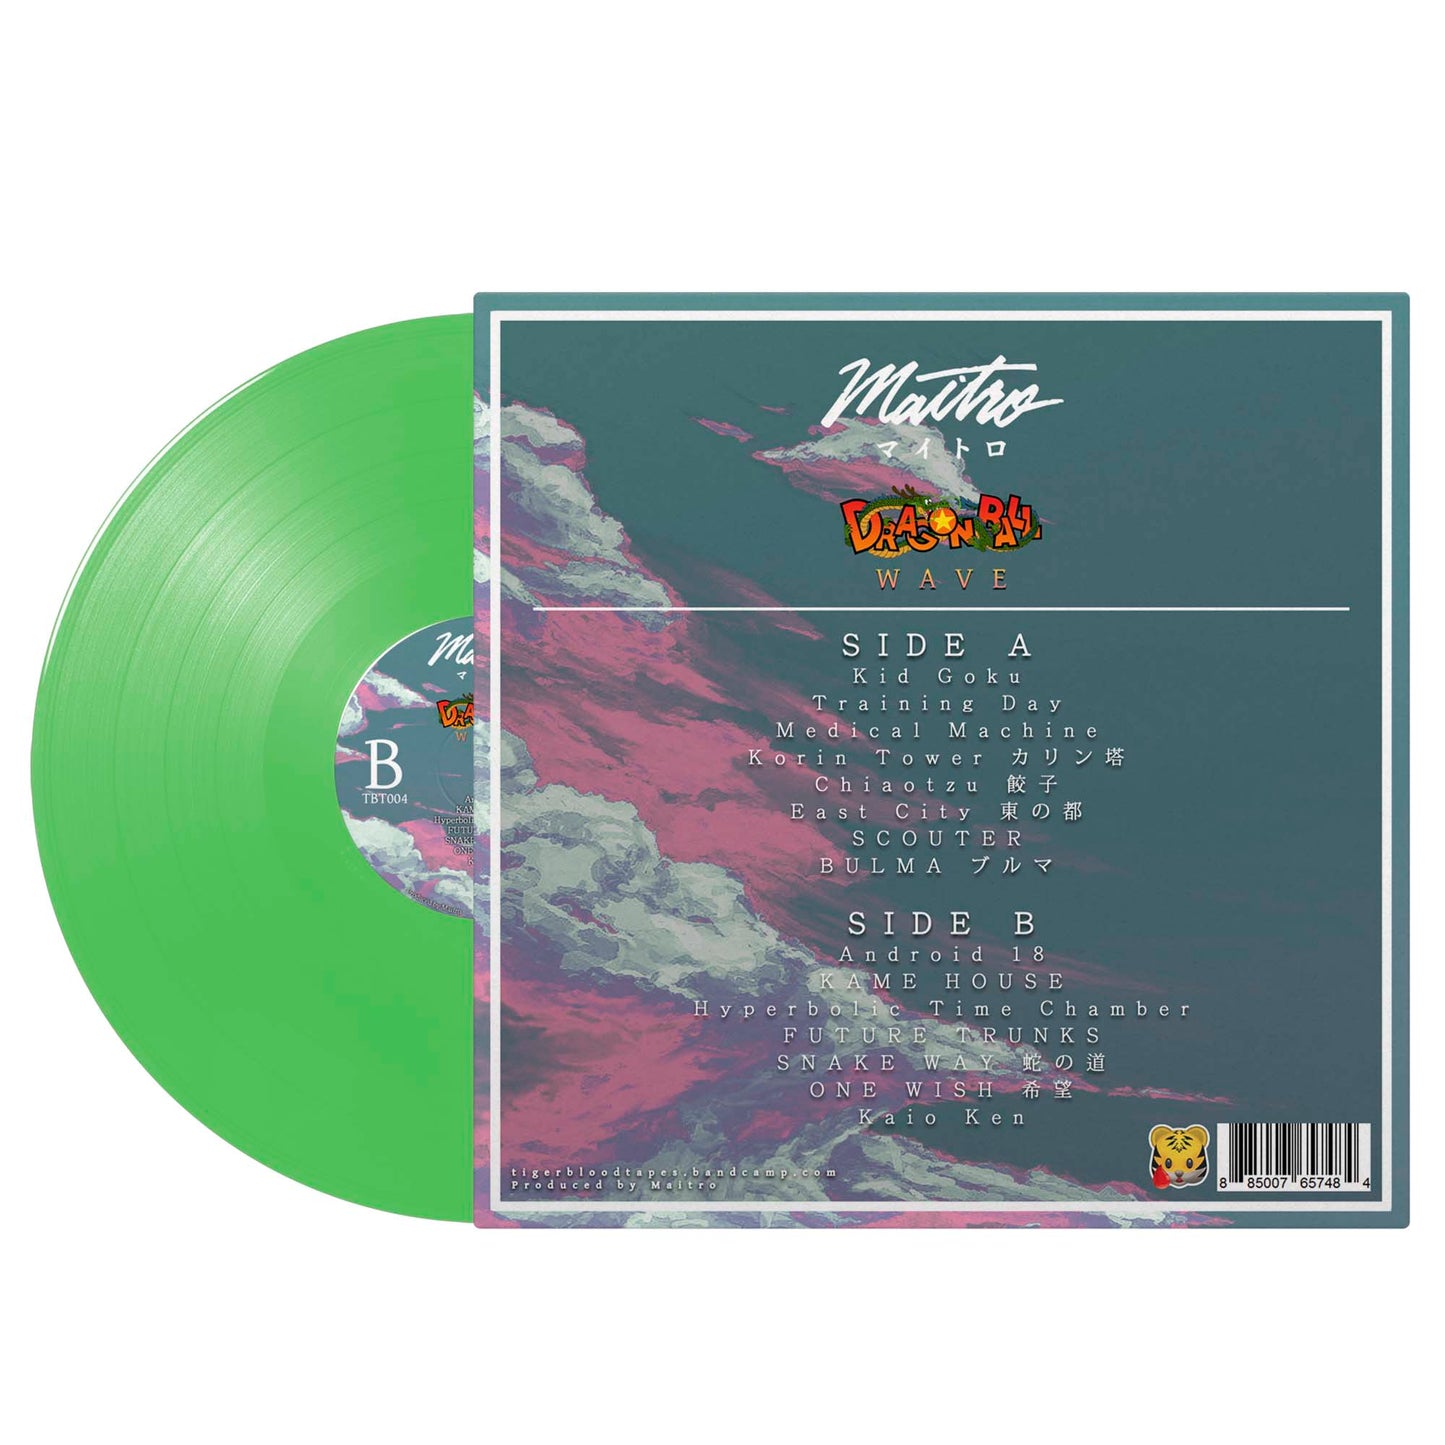 Maitro - "Dragonball Wave" Limited Edition 12" Ooze Green Vinyl